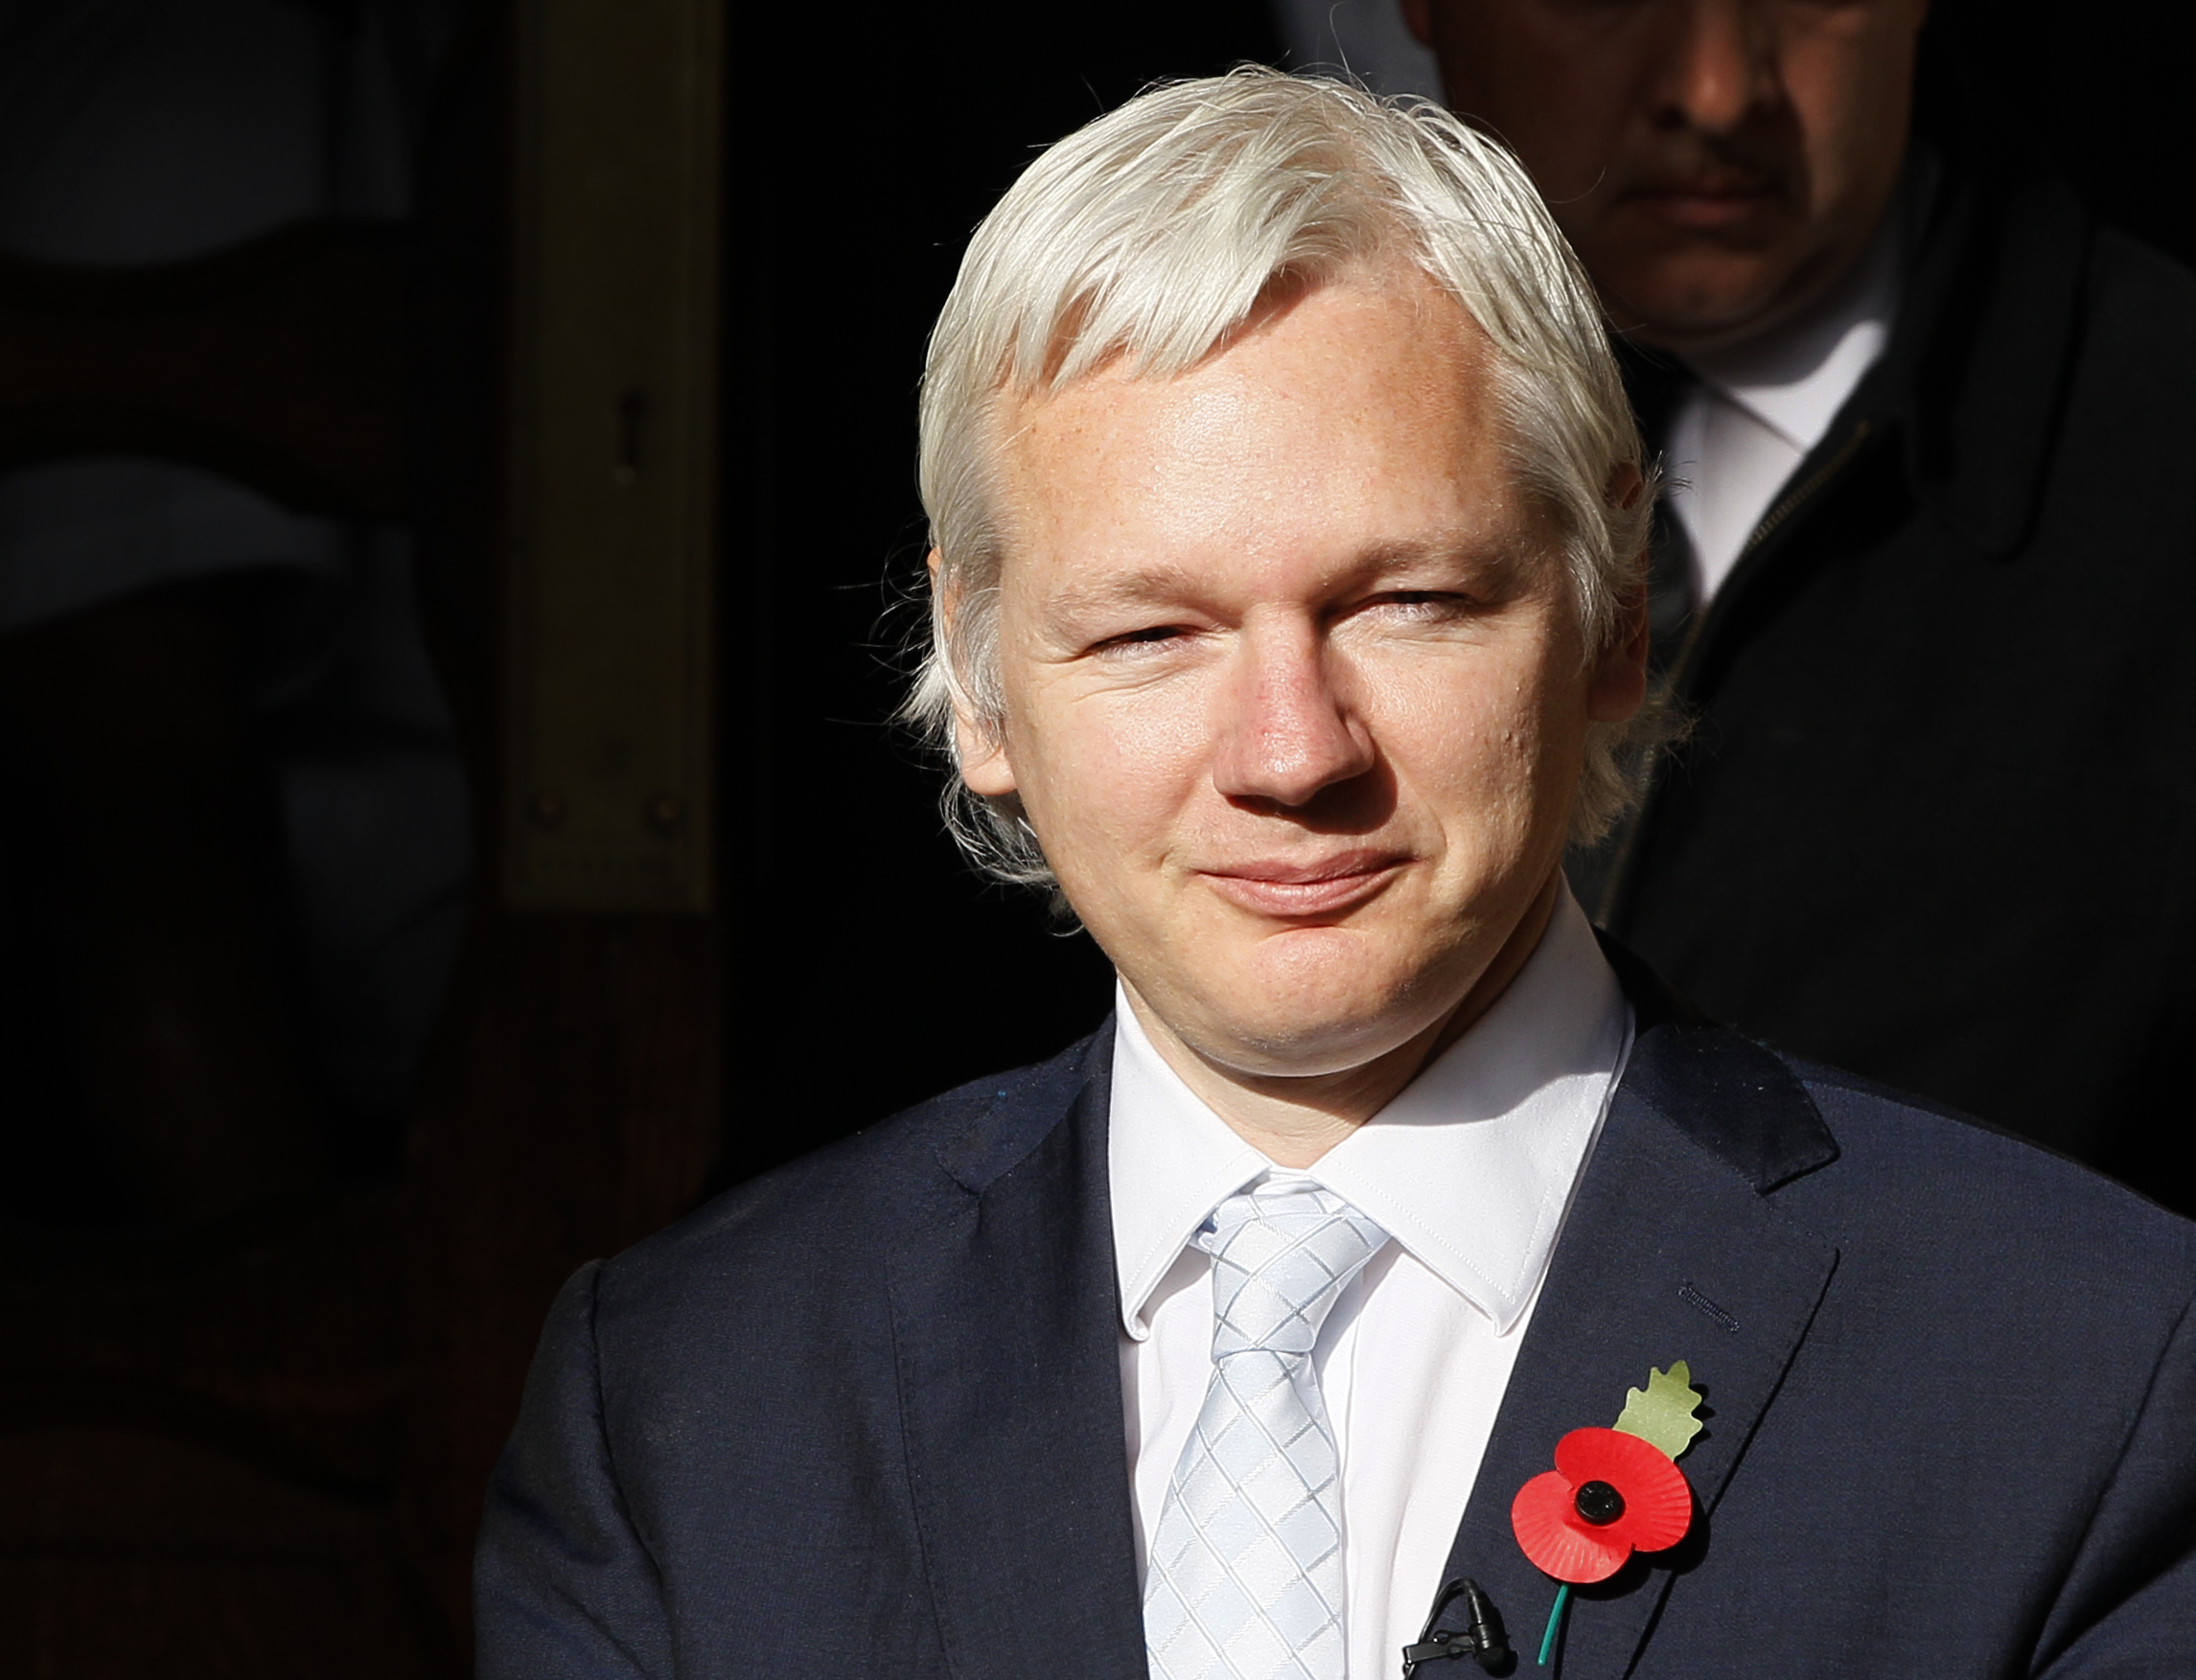 Sverige, Utlämning, Politisk asyl, Julian Assange, Möte, Ambassadör, Ecuador, Justitiedepartementet, Wikileaks, Beatrice Ask